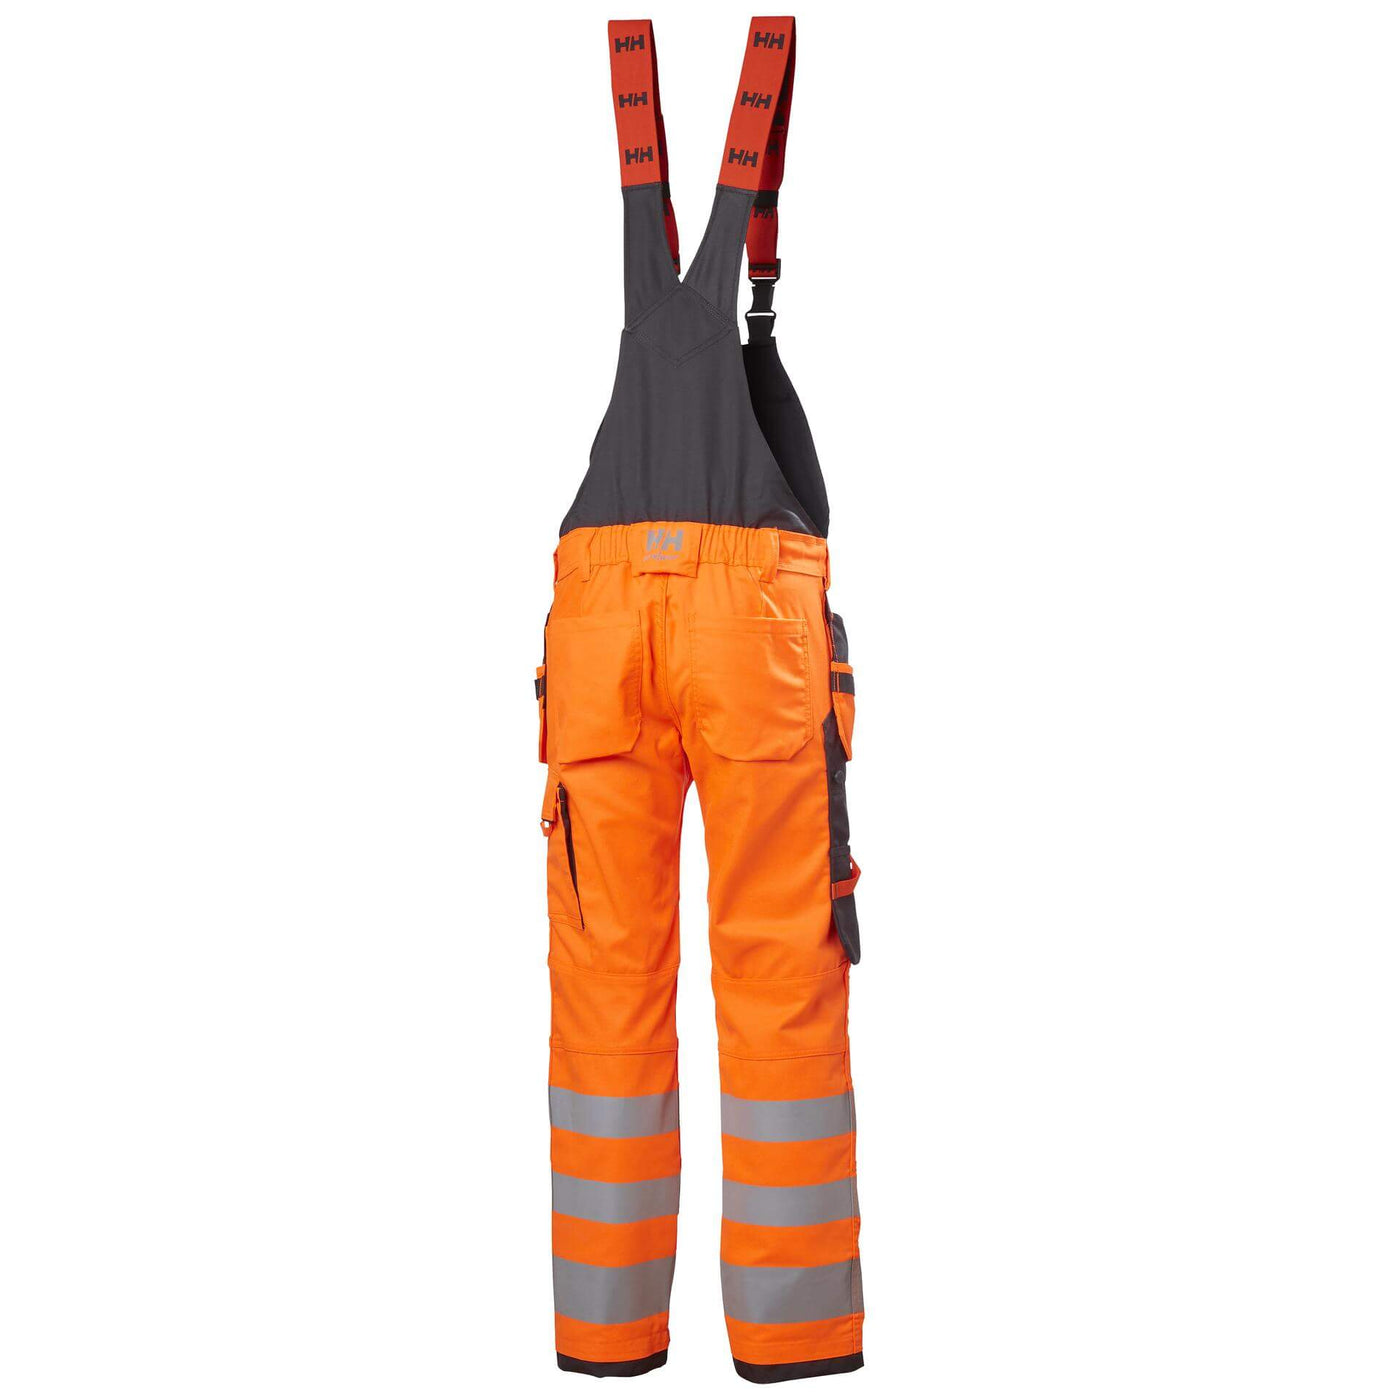 Helly Hansen Alna 2.0 Hi Vis Stretch Construction Bib and Brace Pants Orange/Ebony 2 Rear #colour_orange-ebony